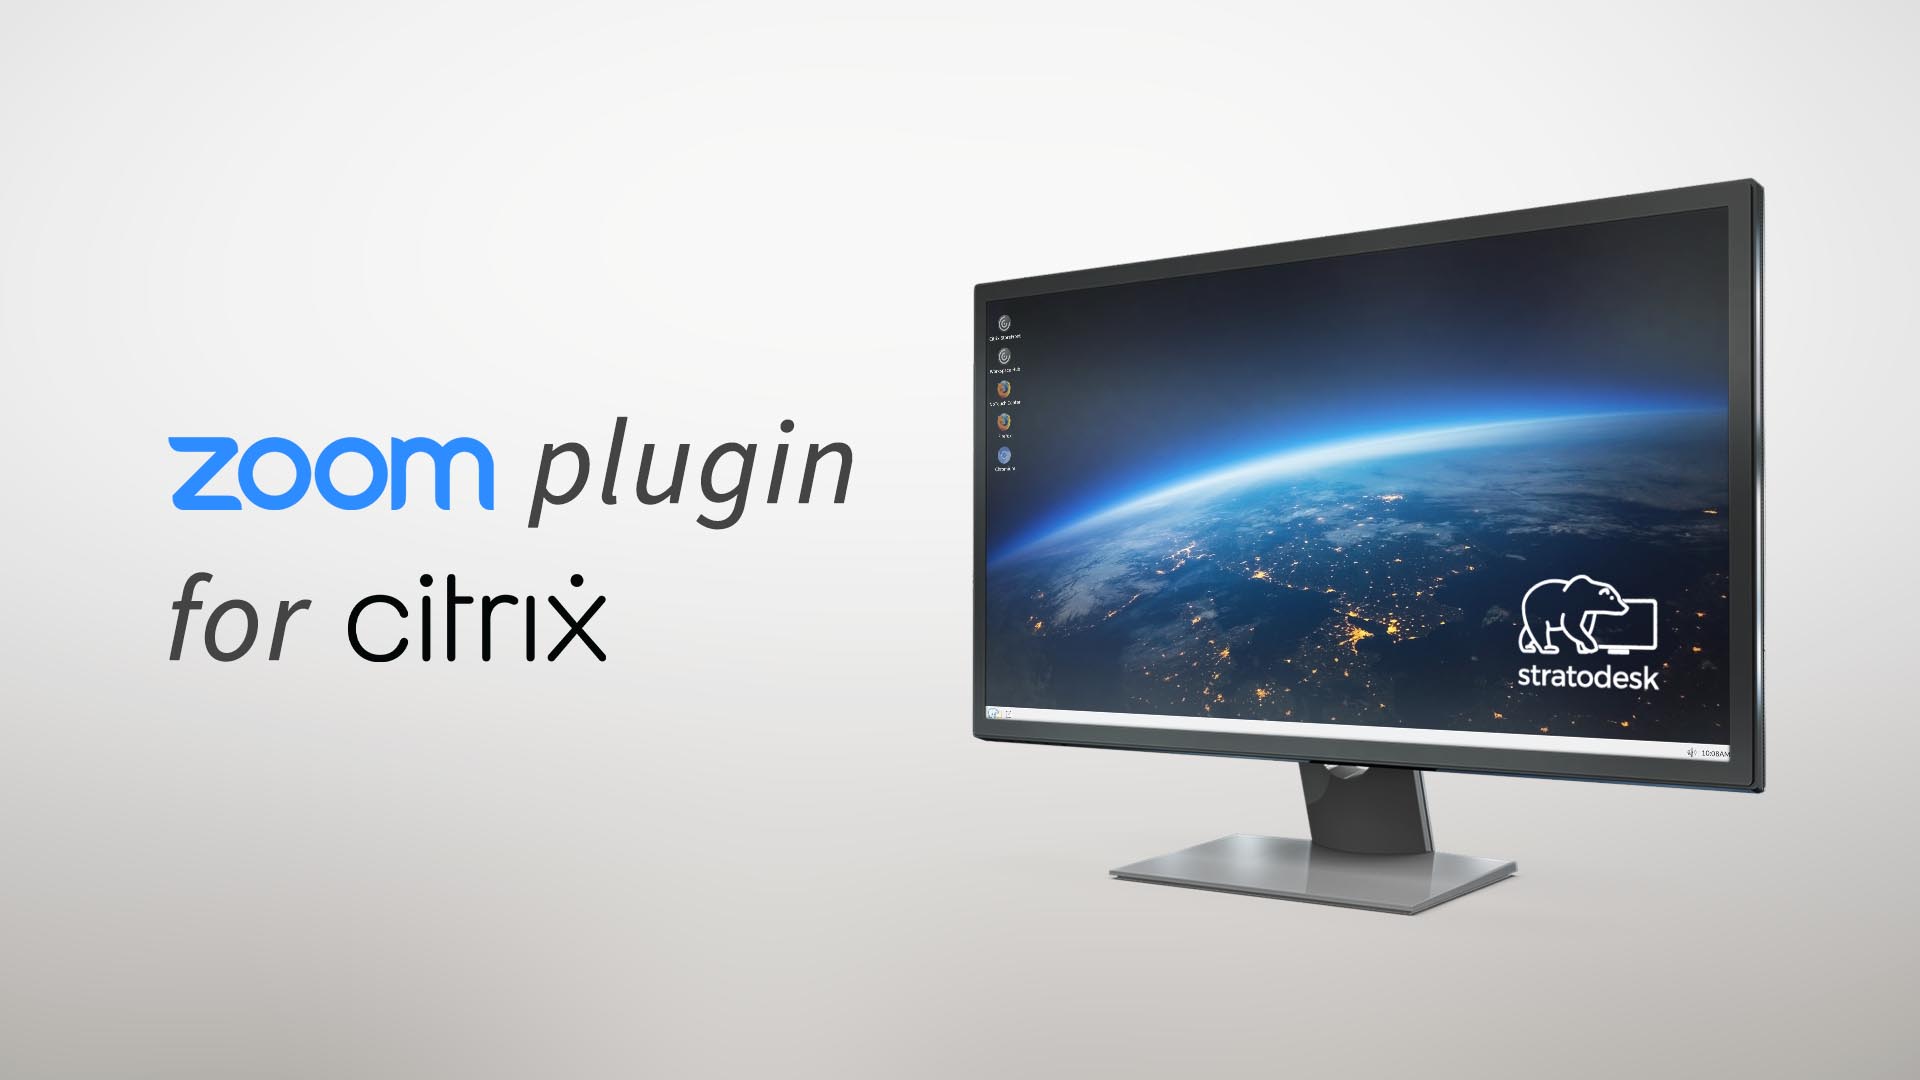 Zoom plugin for citrix image